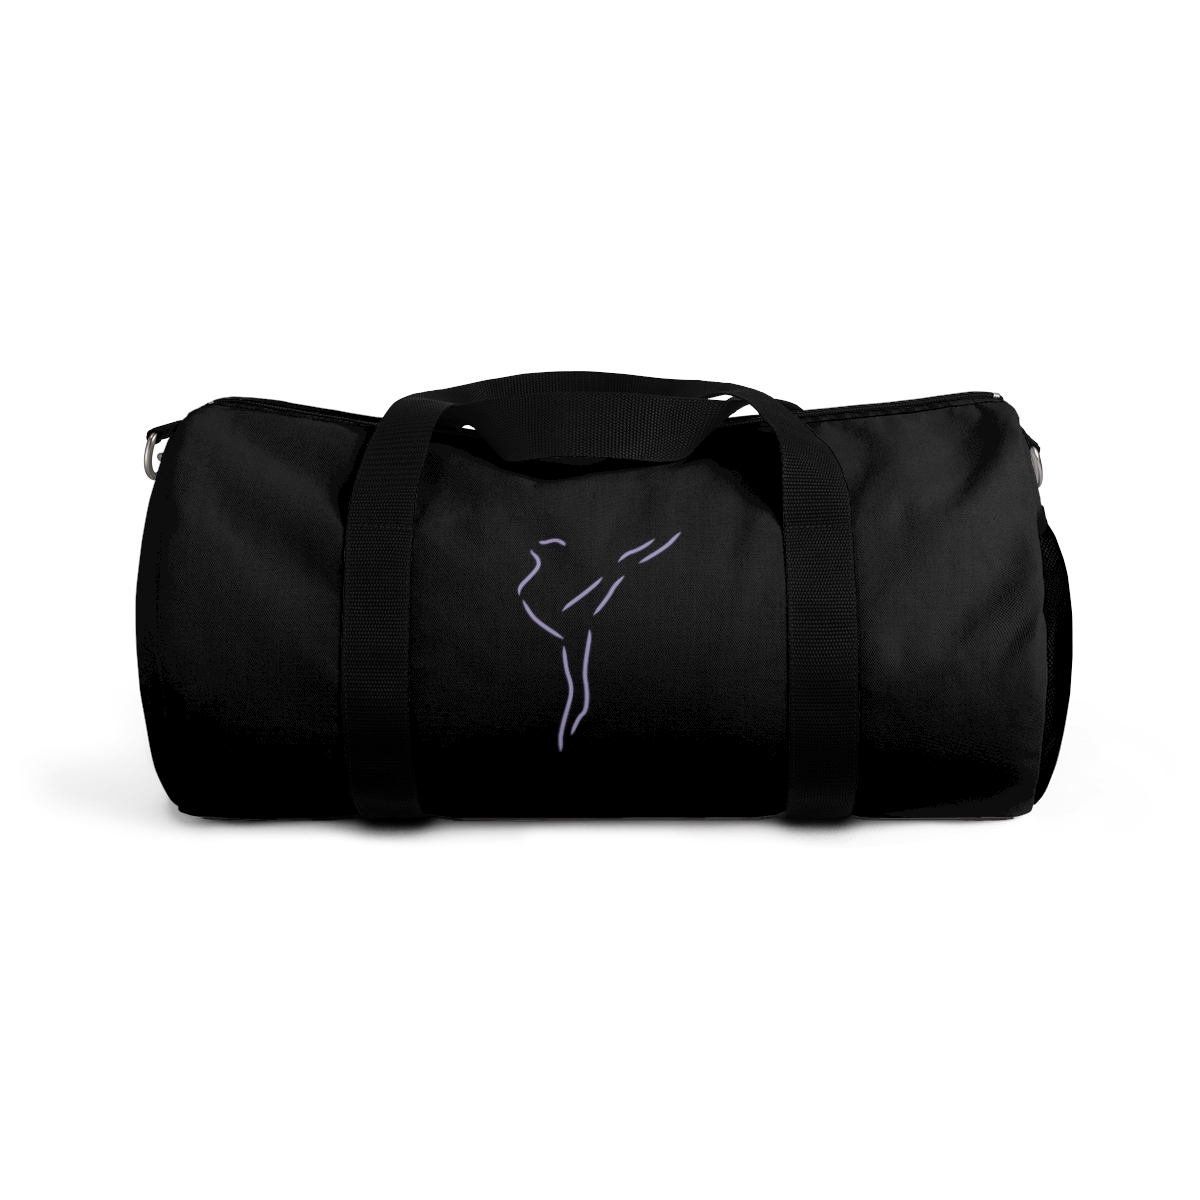 SJDT Duffel Bag product main image